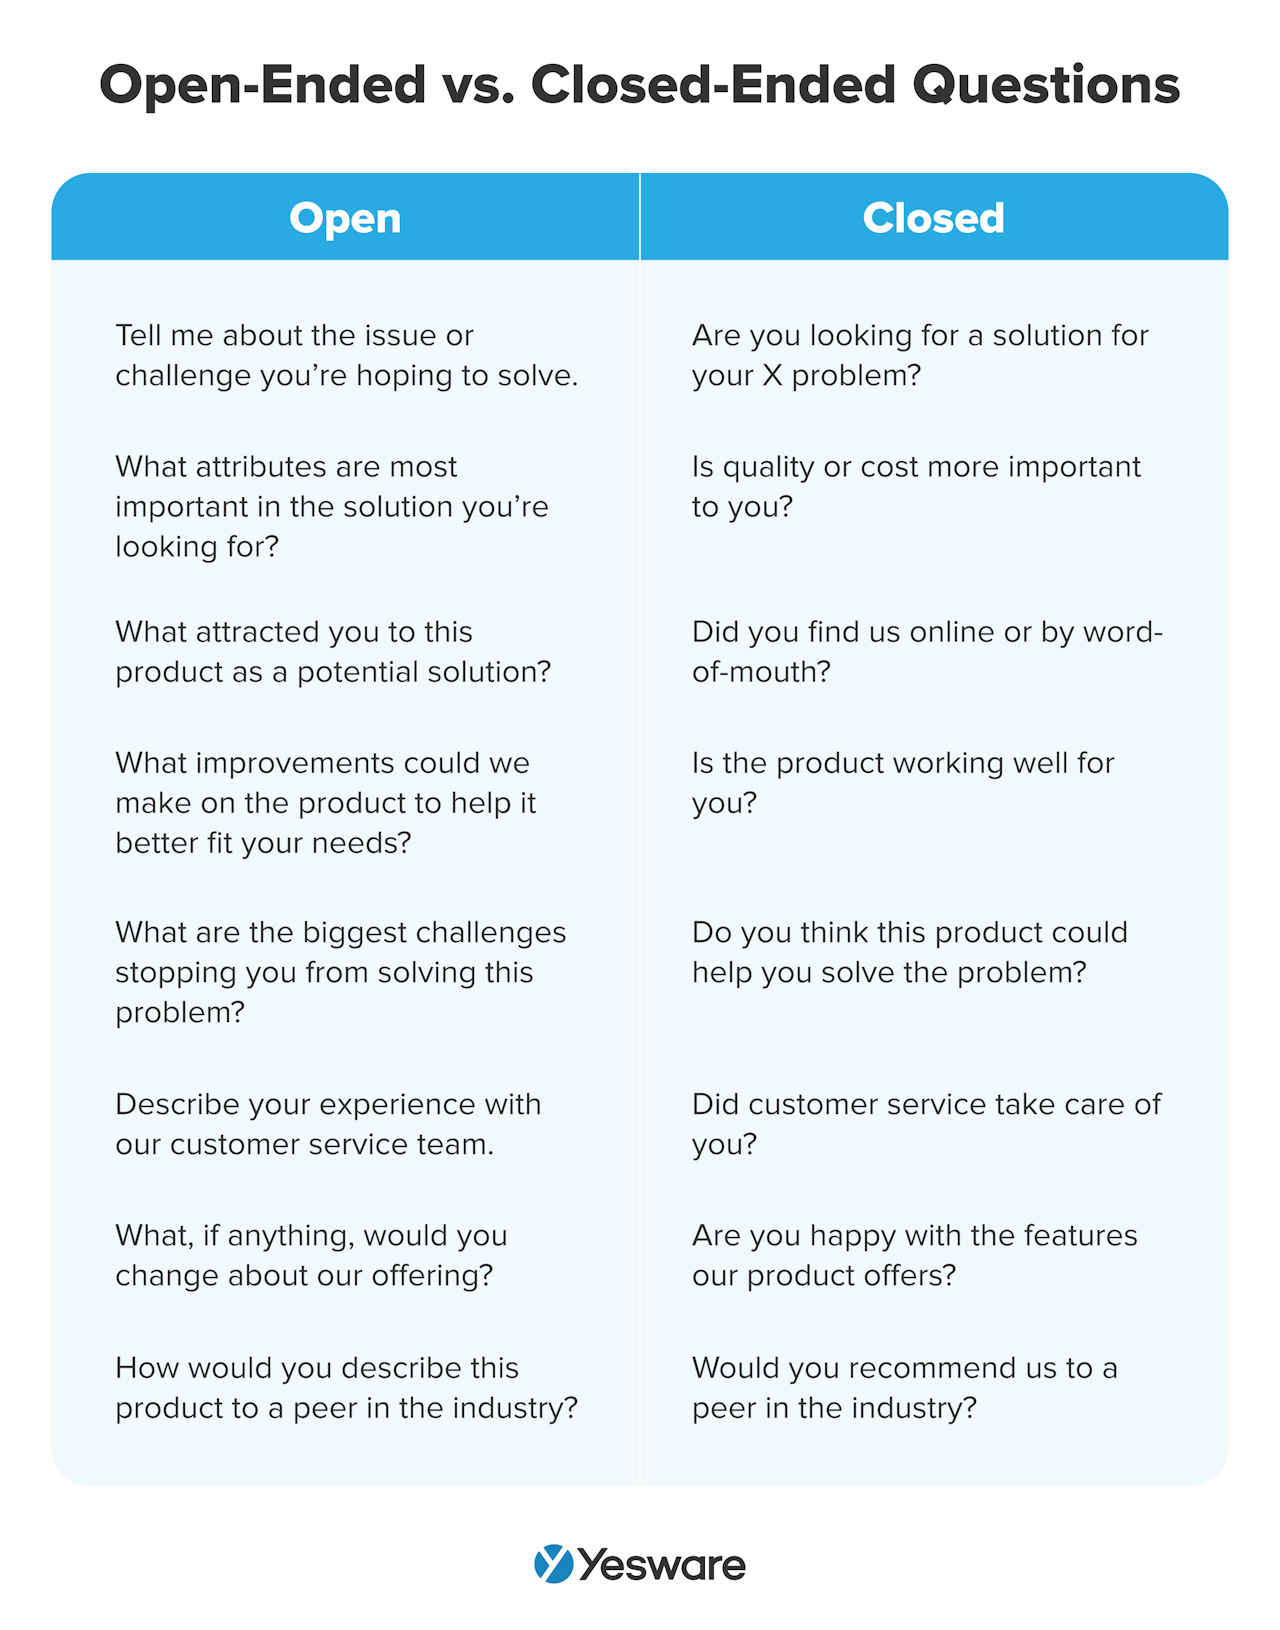 Sales Representatives Skills: Ask open-ended questions